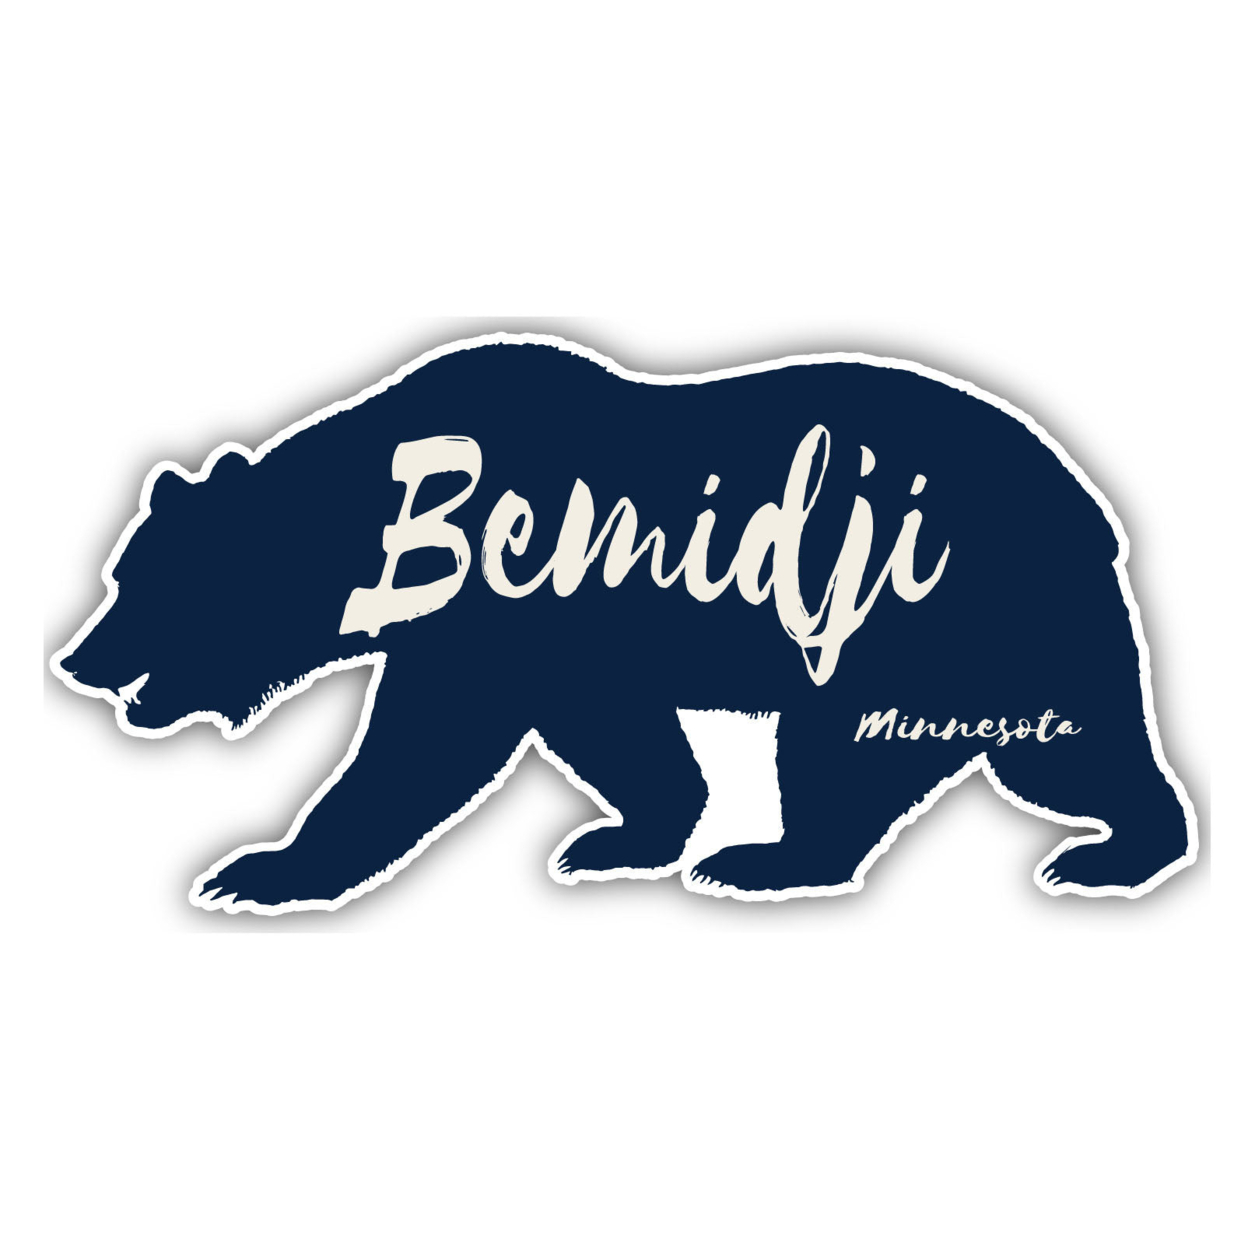 Bemidji Minnesota Souvenir Decorative Stickers (Choose Theme And Size) - 4-Pack, 4-Inch, Tent